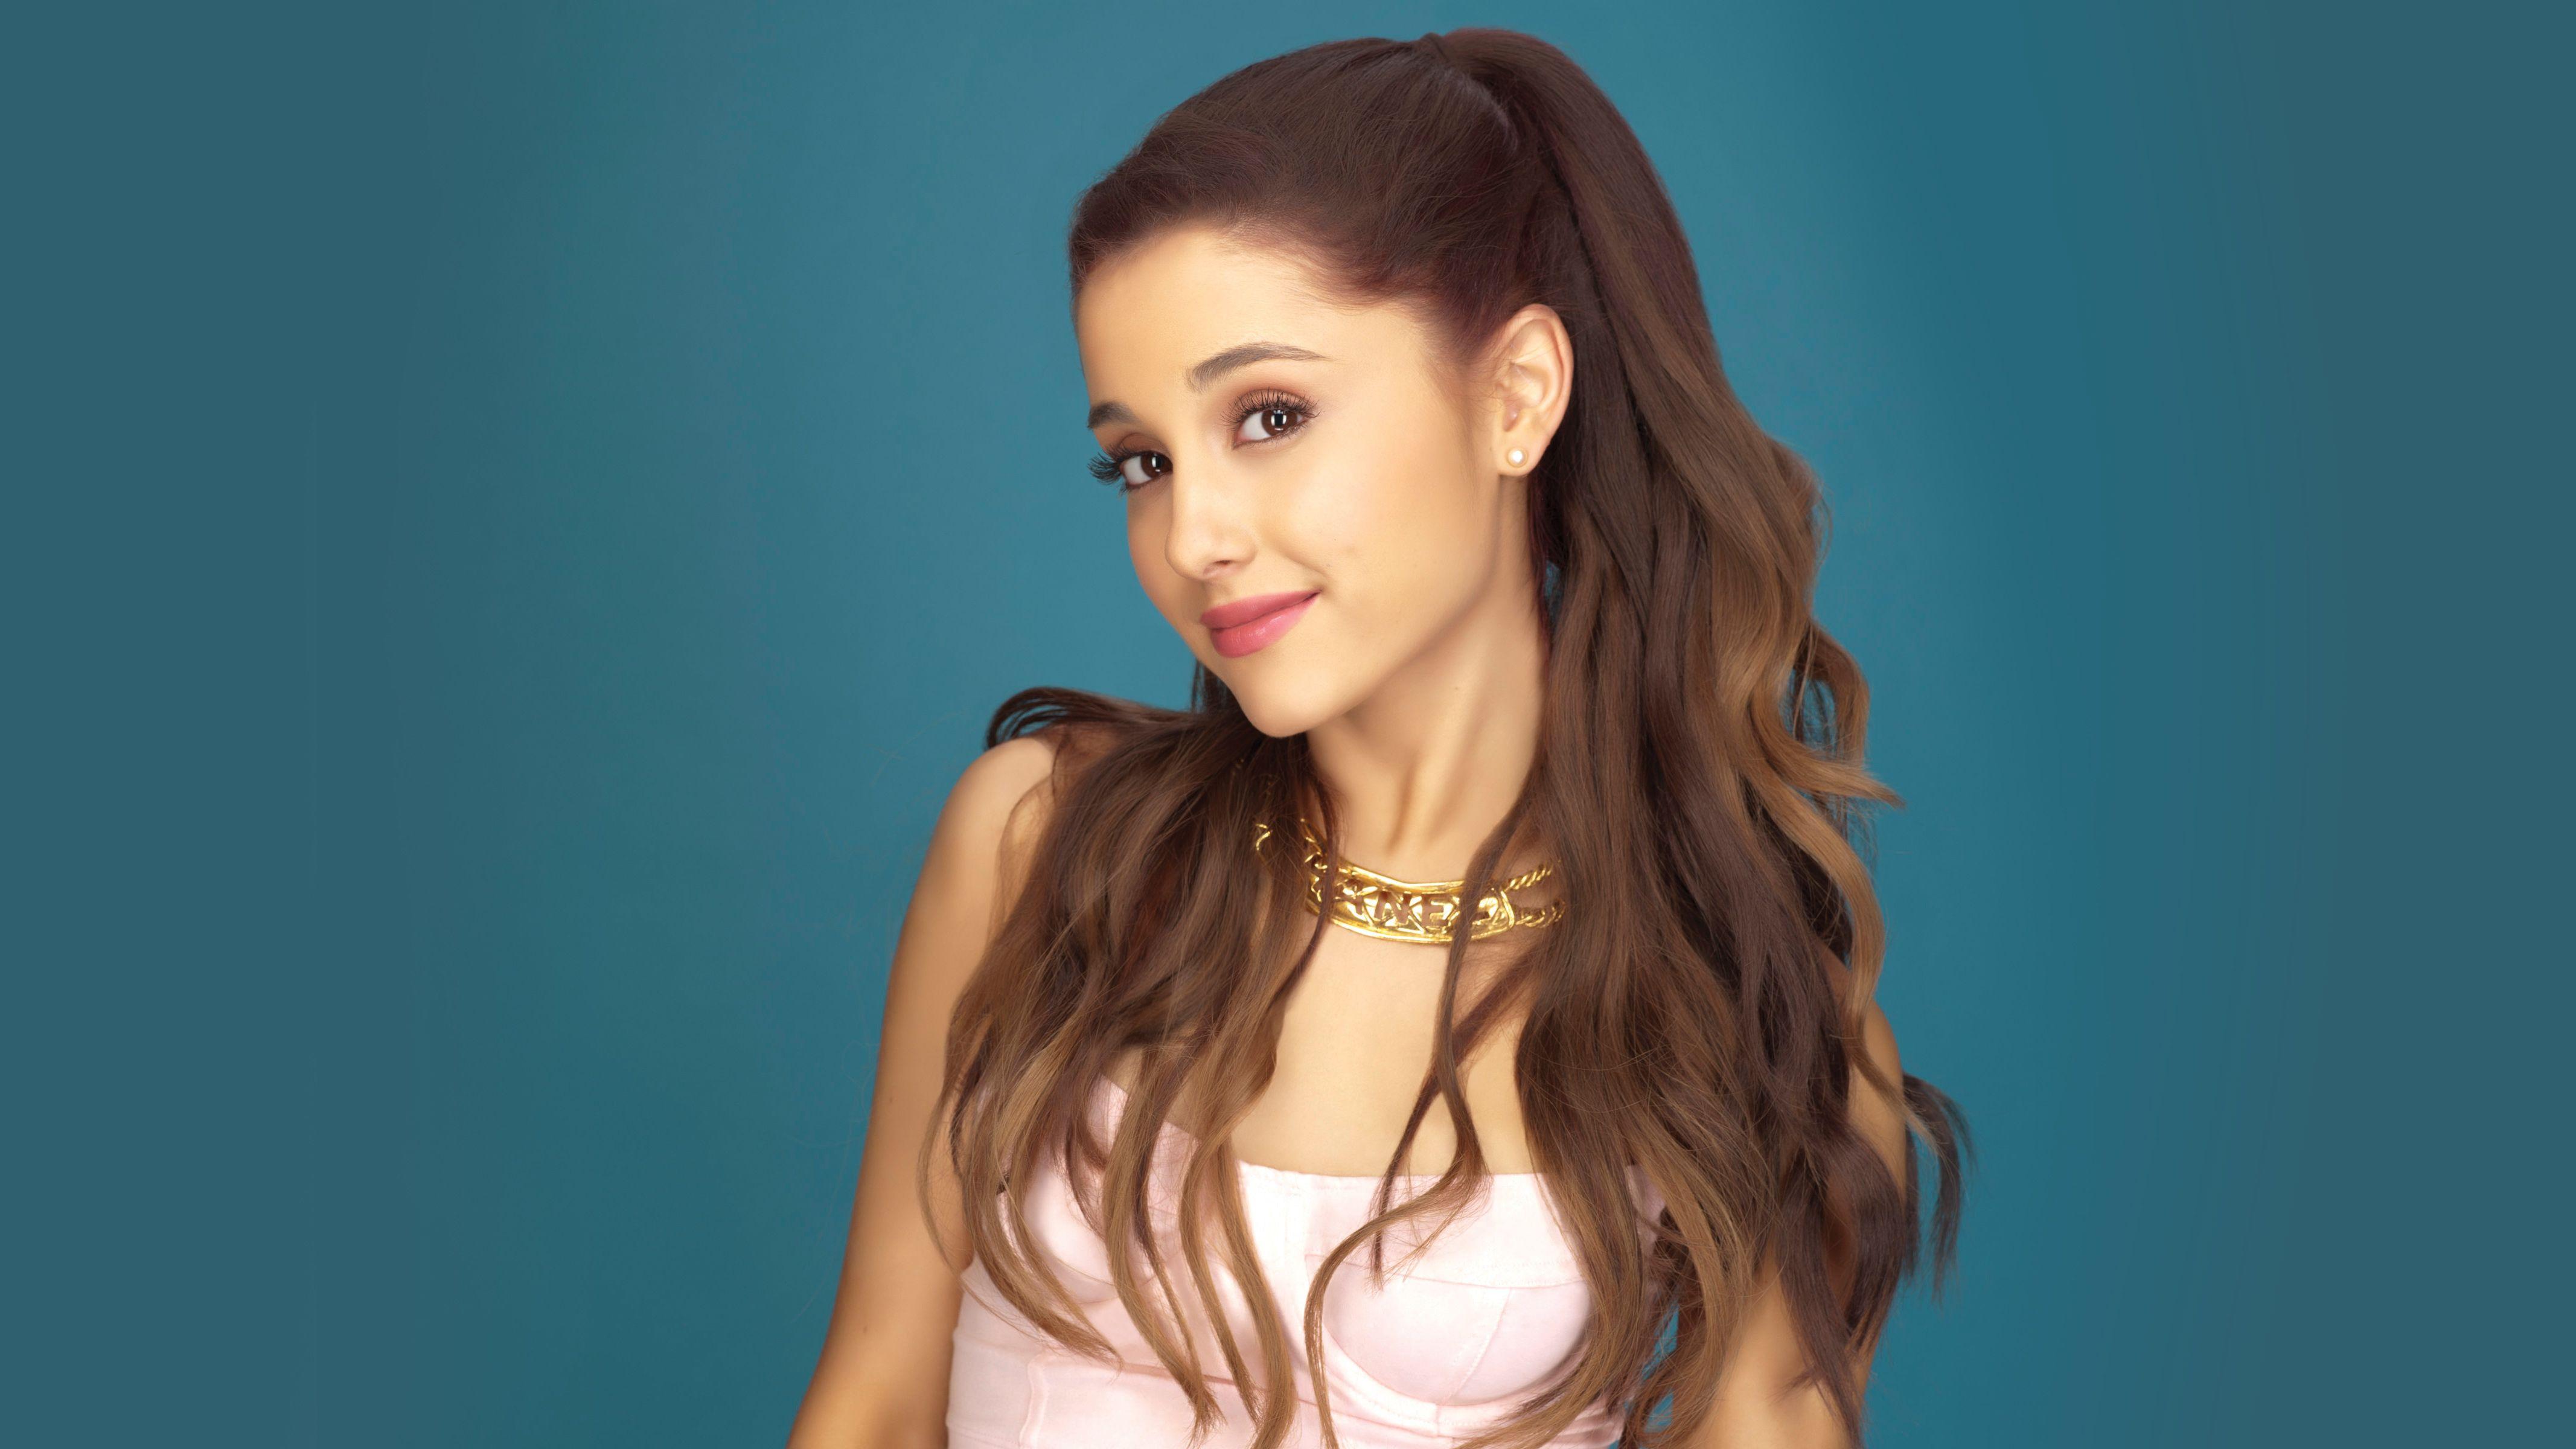 Ariana Grande Wallpaper Background HD 63382 4267x2400 px